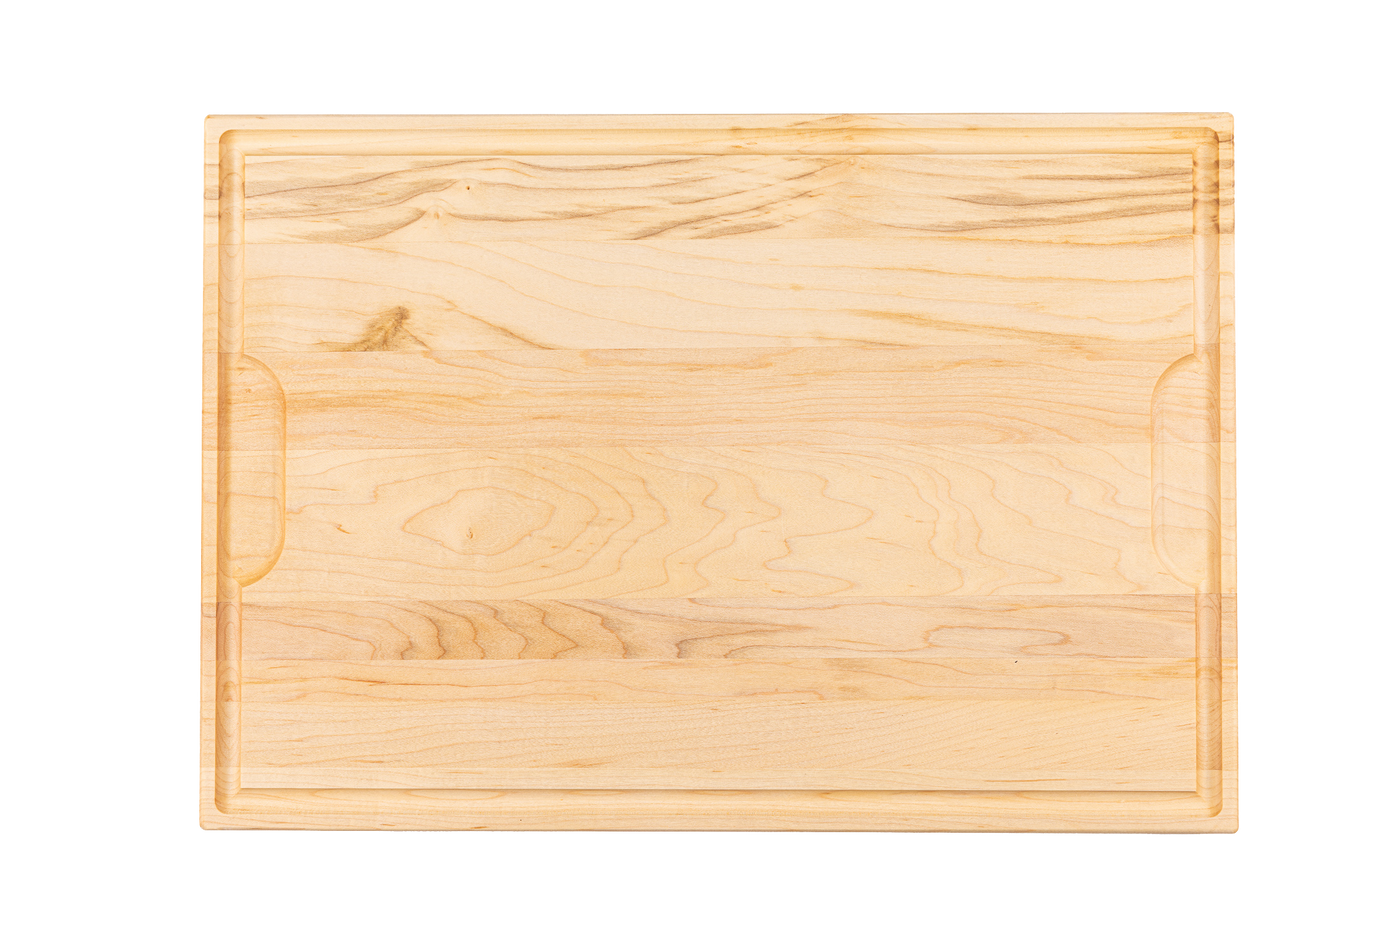 Maple - IHG18 - Cutting board with Juice Groove 18"x12"x3/4"